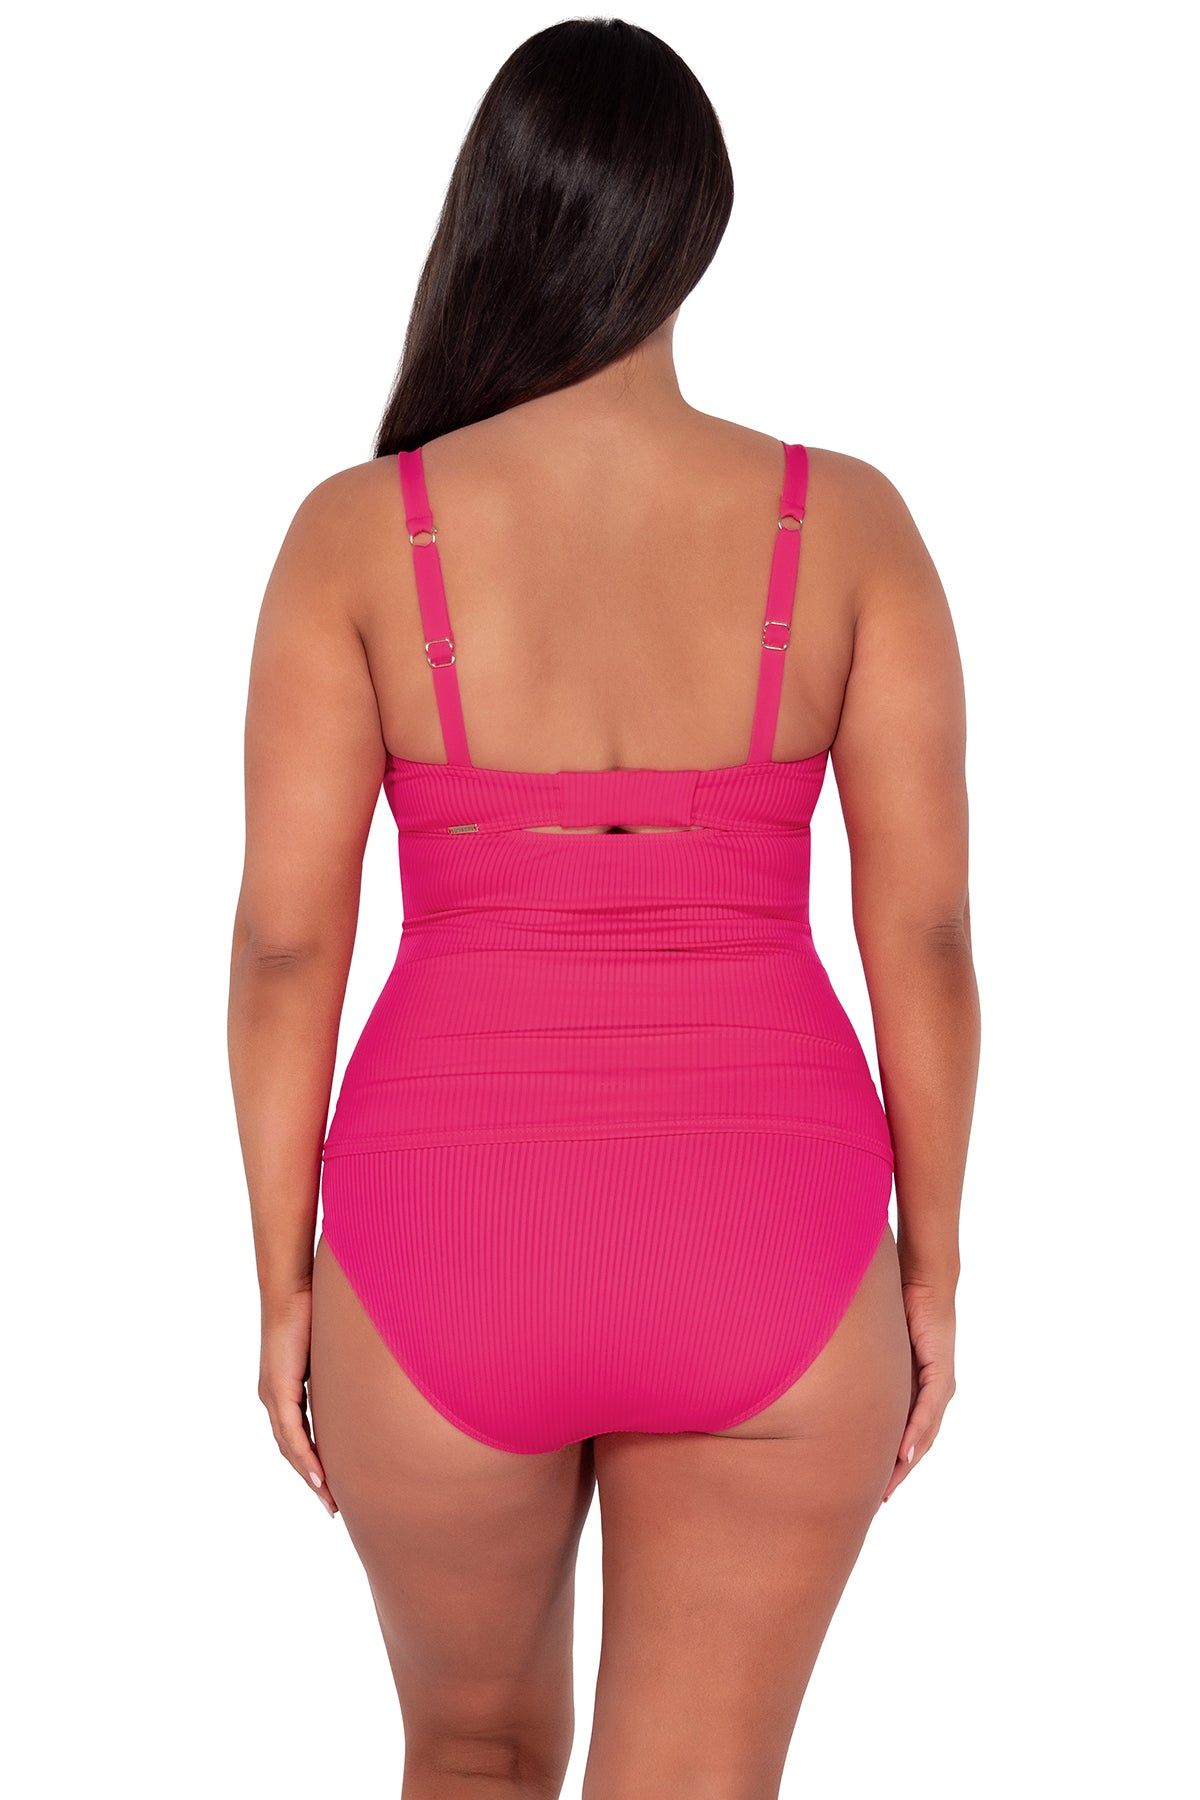 Back pose #1 of Nicki wearing Sunsets Begonia Sandbar Rib Zuri V-Wire Tankini Top paired with Hannah High Waist bikini bottom